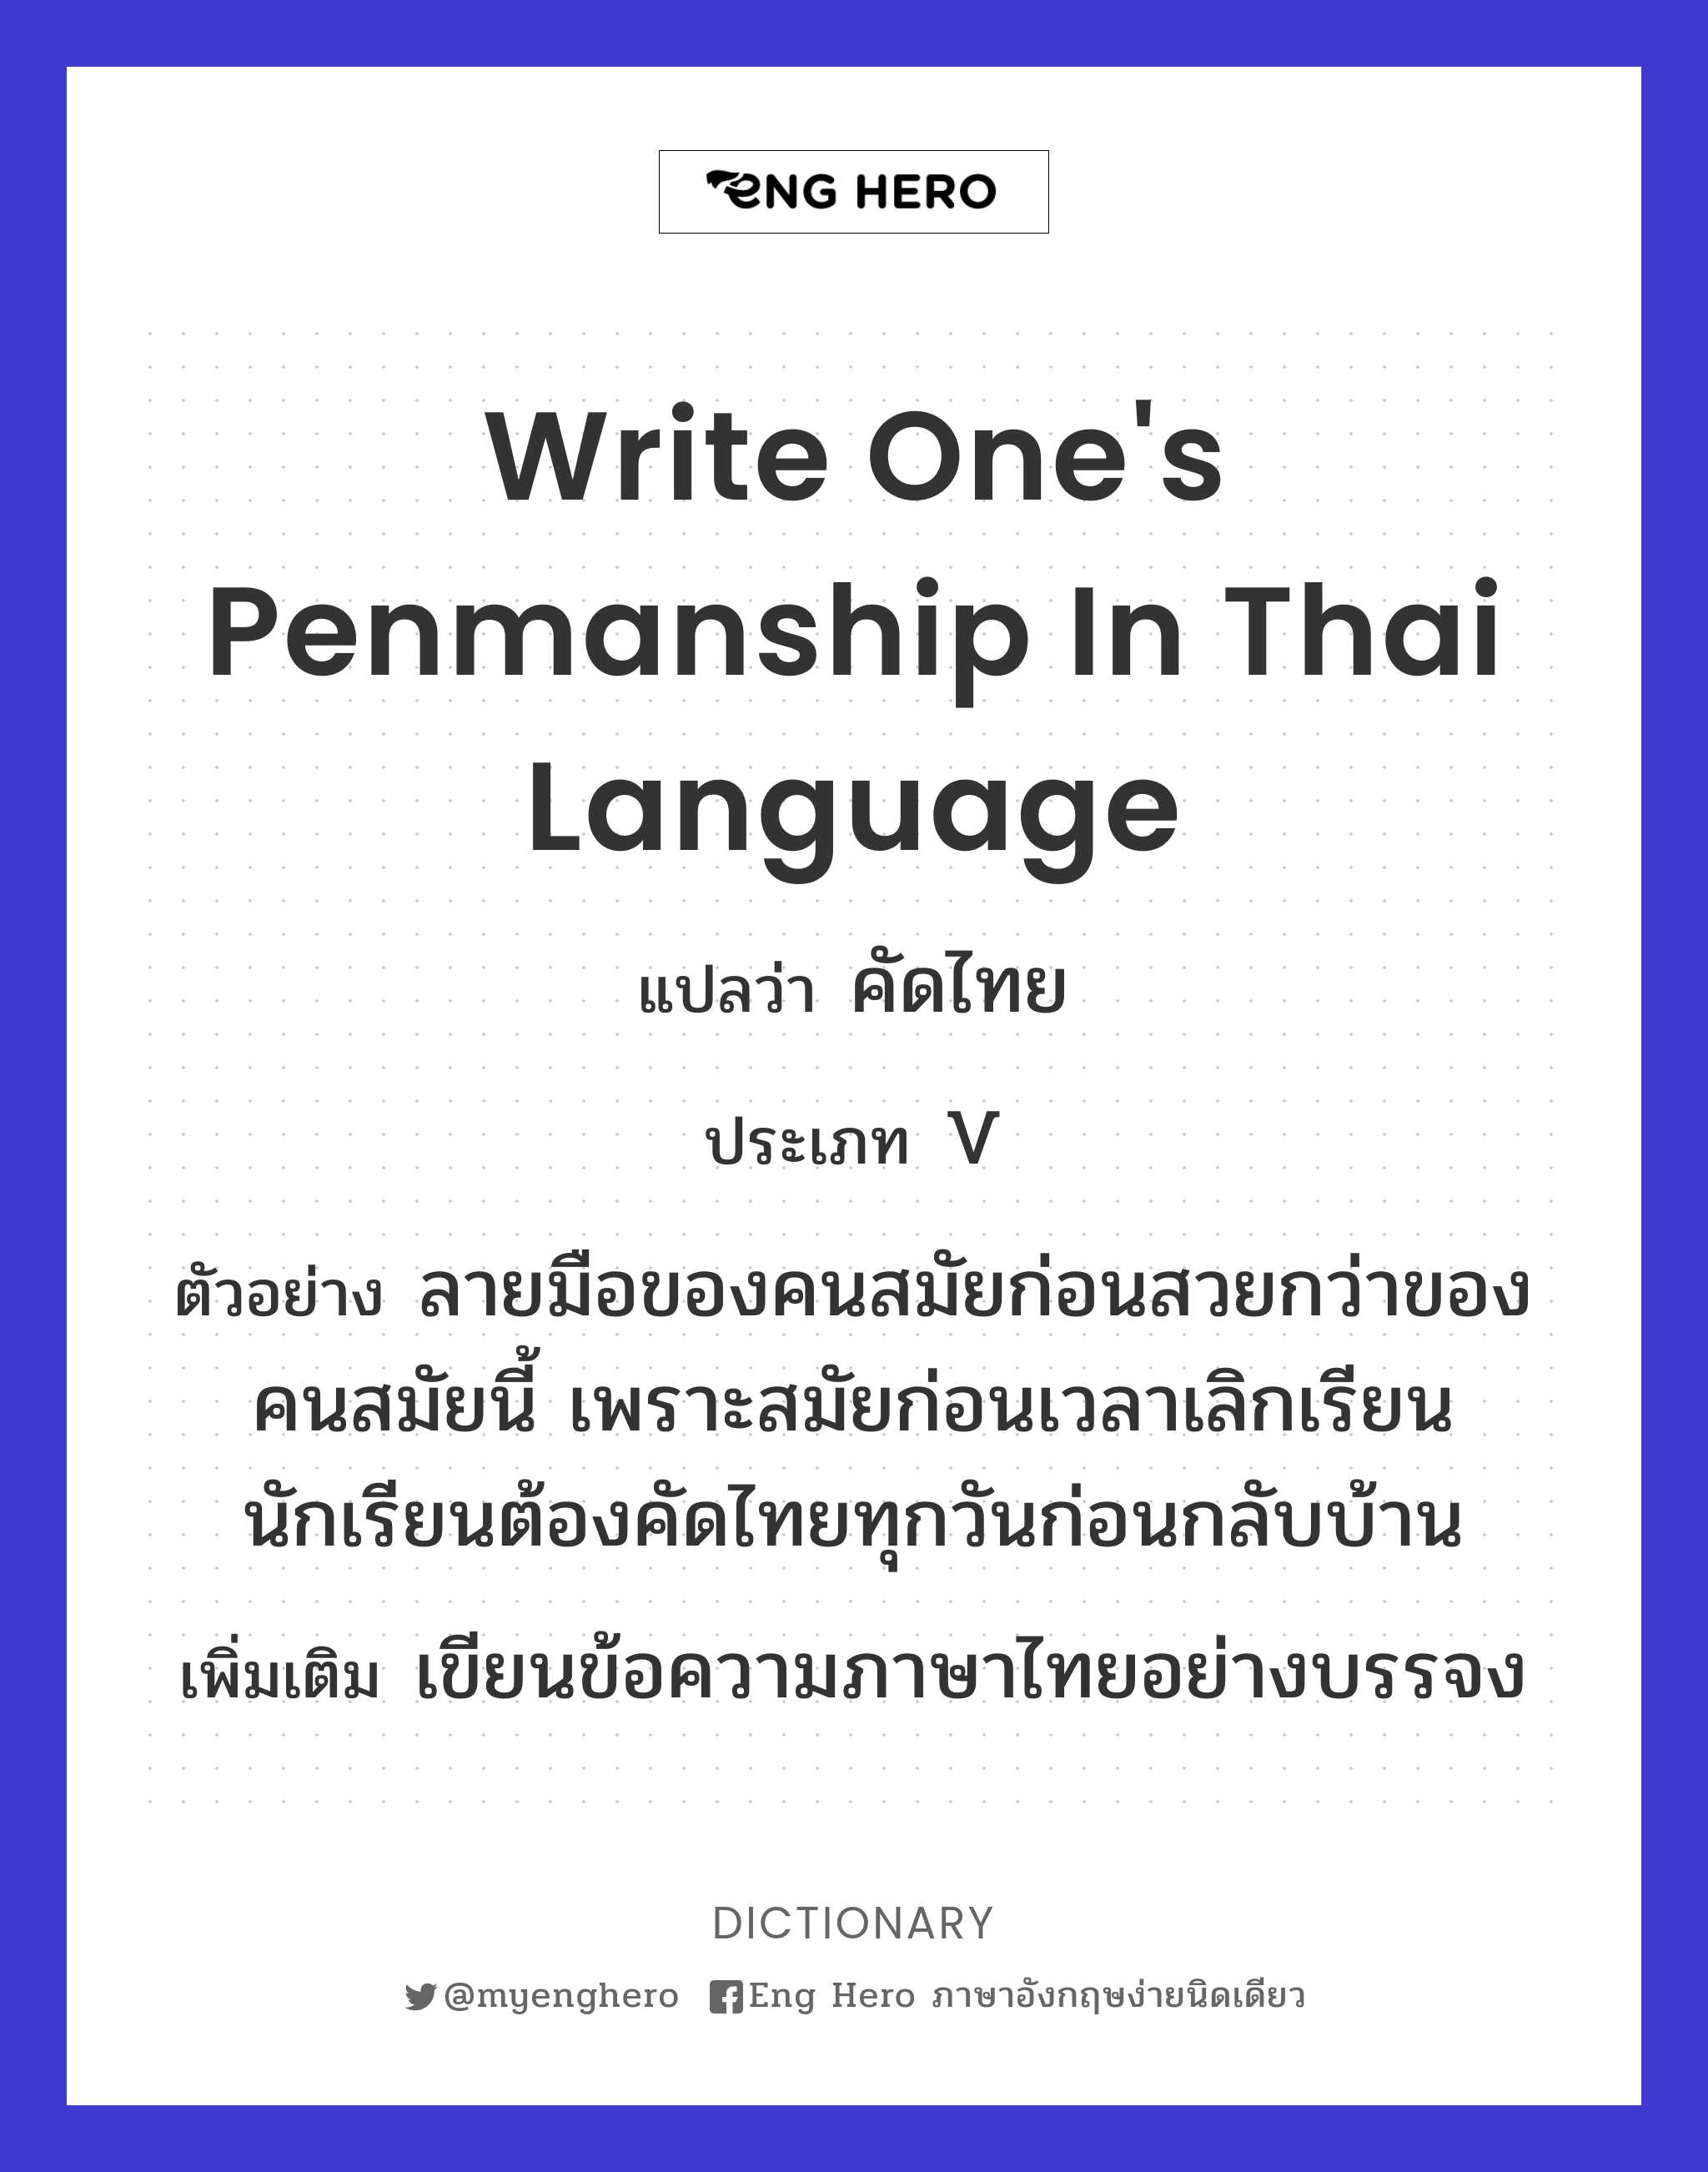 write one's penmanship in Thai language